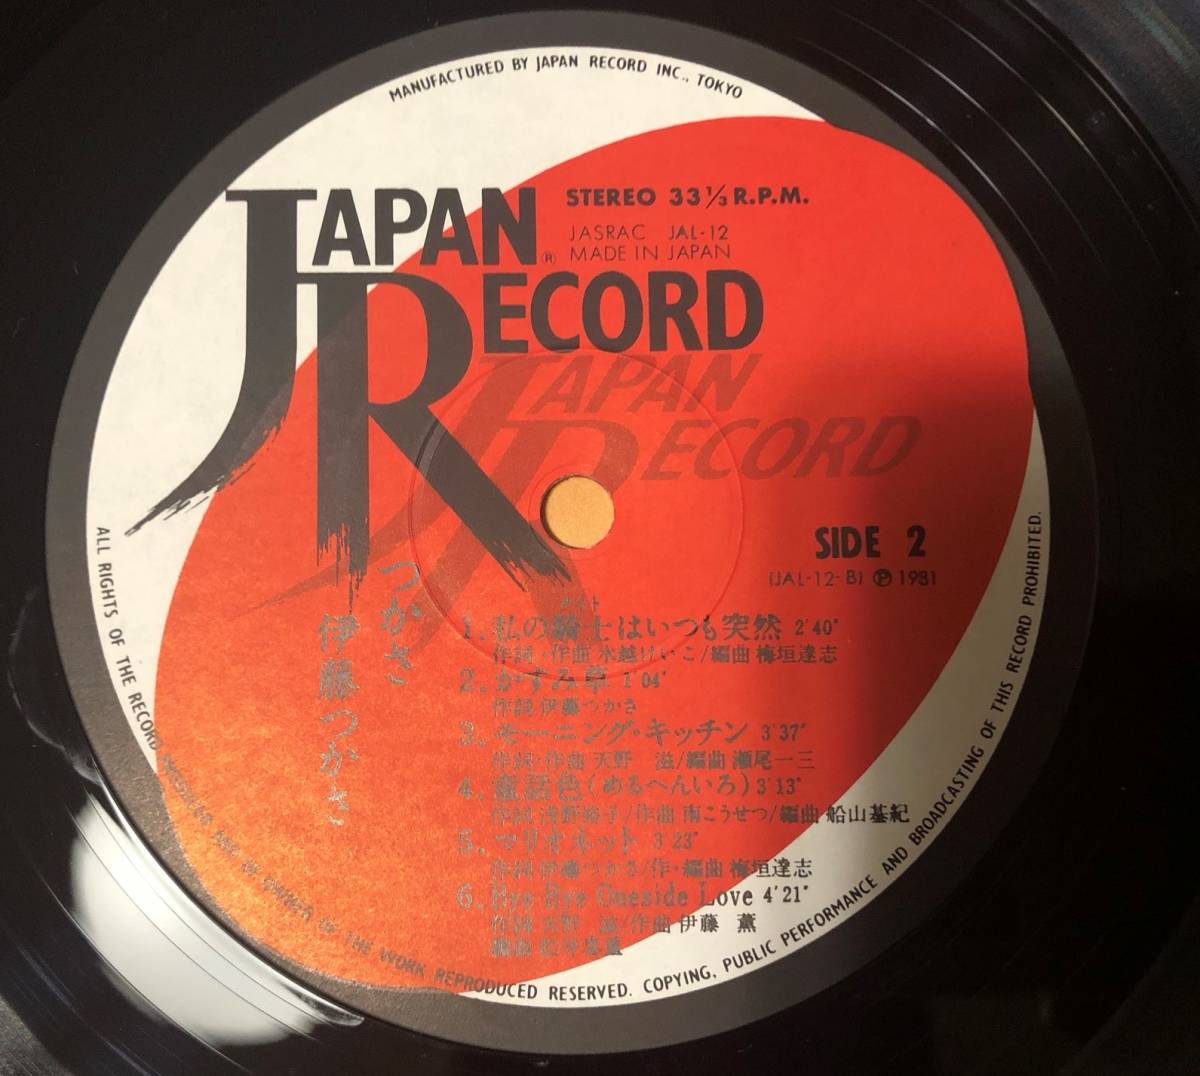 LP[ peace mono * City pop ] Ito Tsukasa /. umbrella [ Kato peace .]